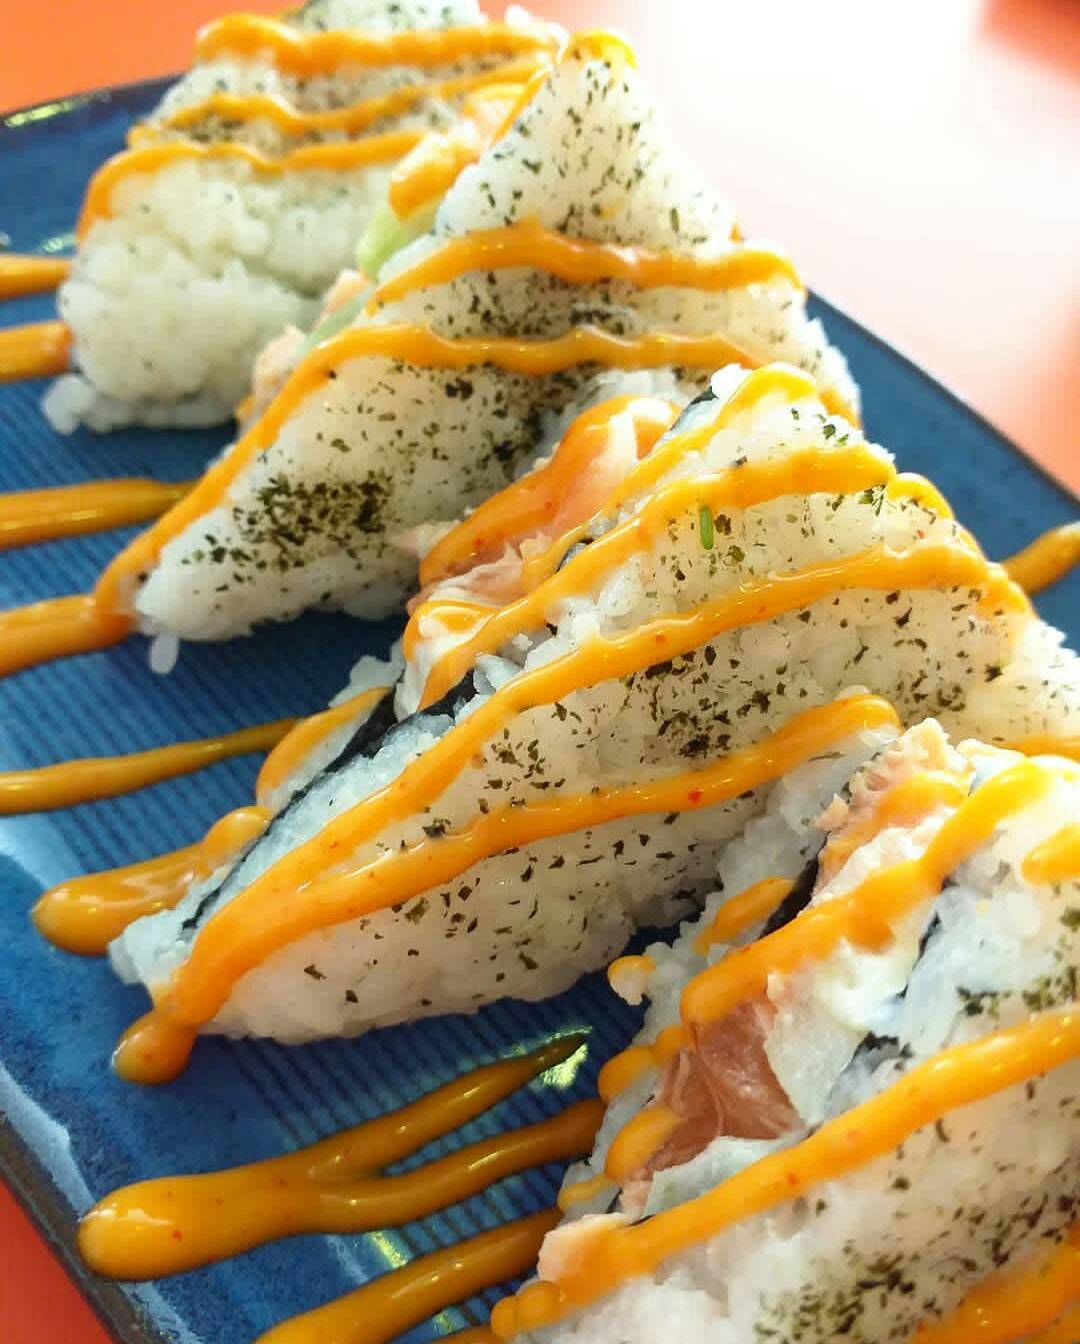 Salmon Mayo Sushi Sandwich via Instagram @makang.yuk